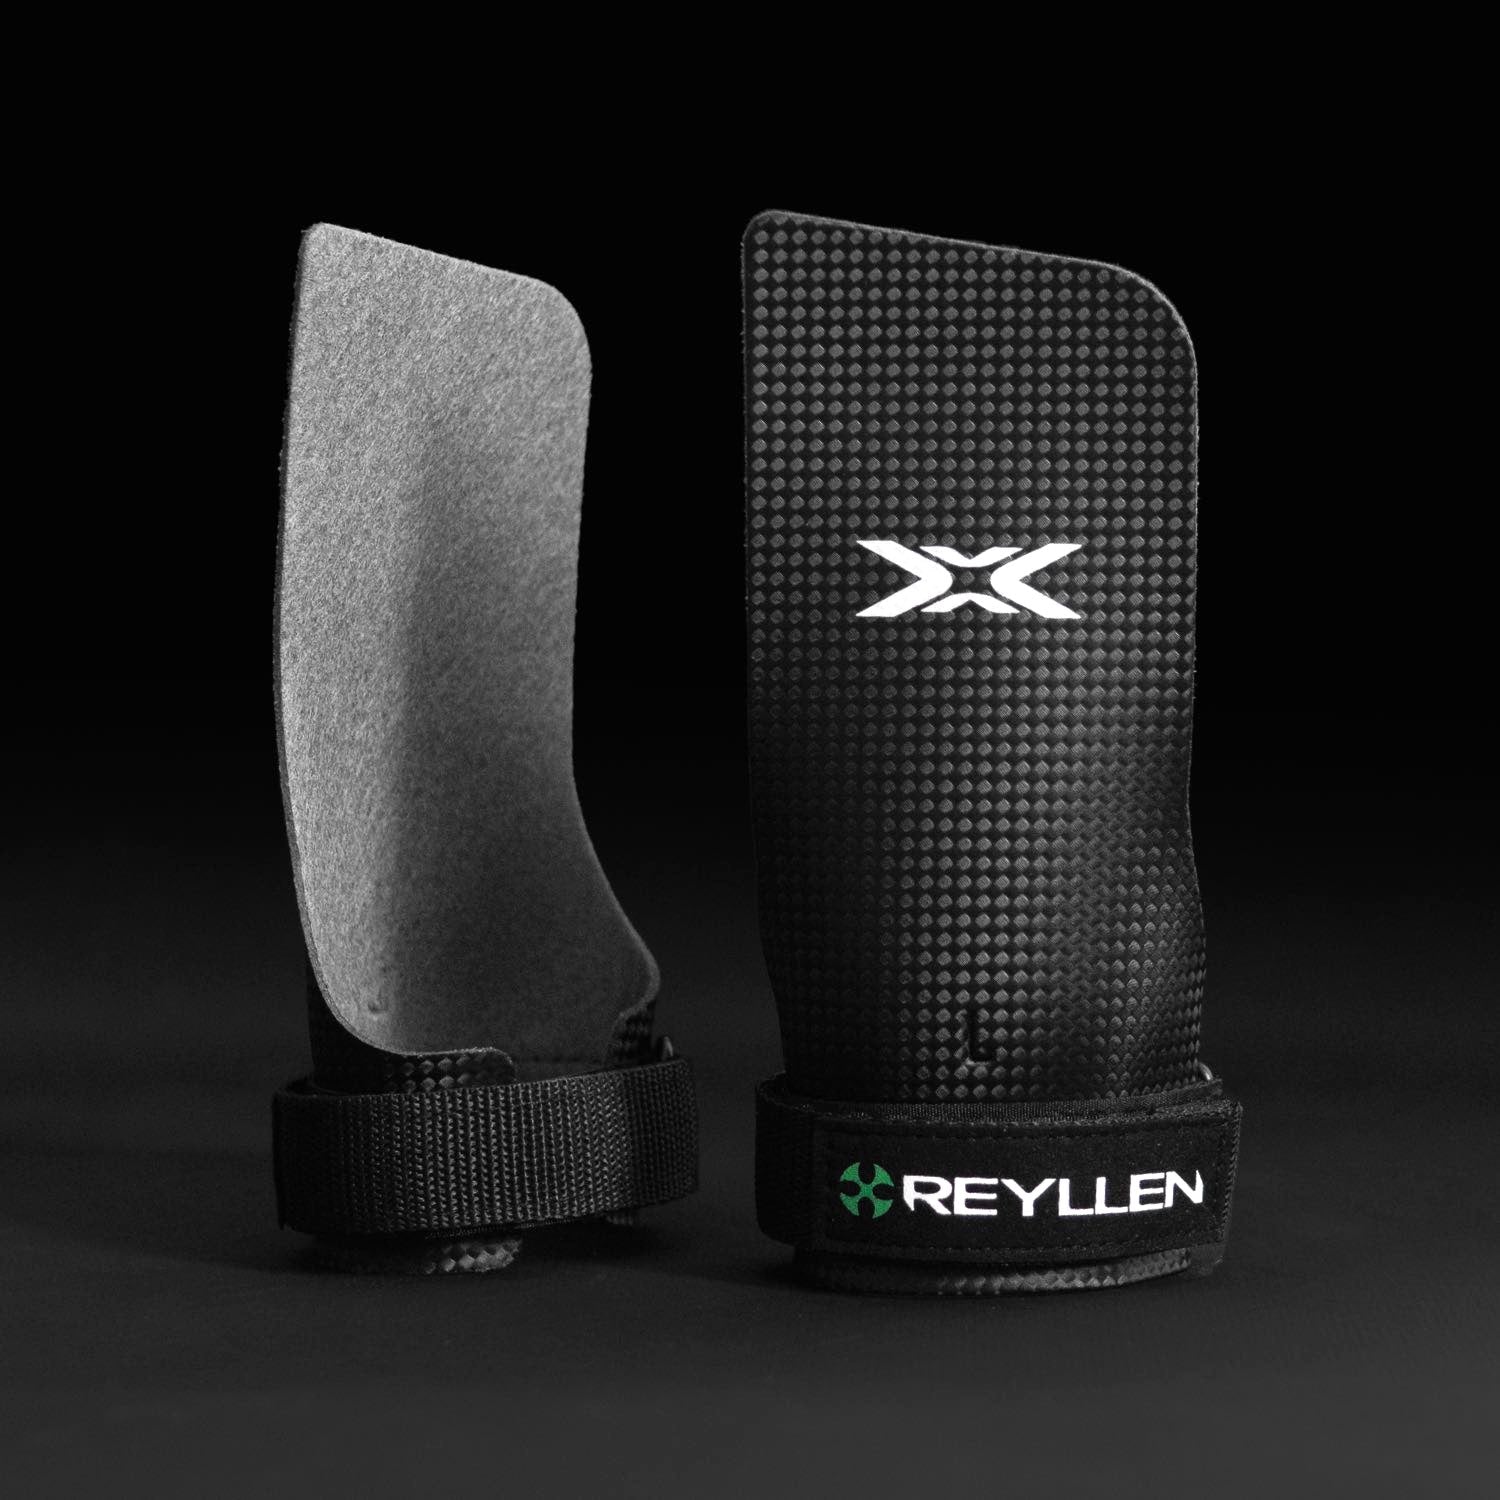 Reyllen Gecko Carbon X2 Fingerless CrossFit Gymnastic Hand Grips - black background